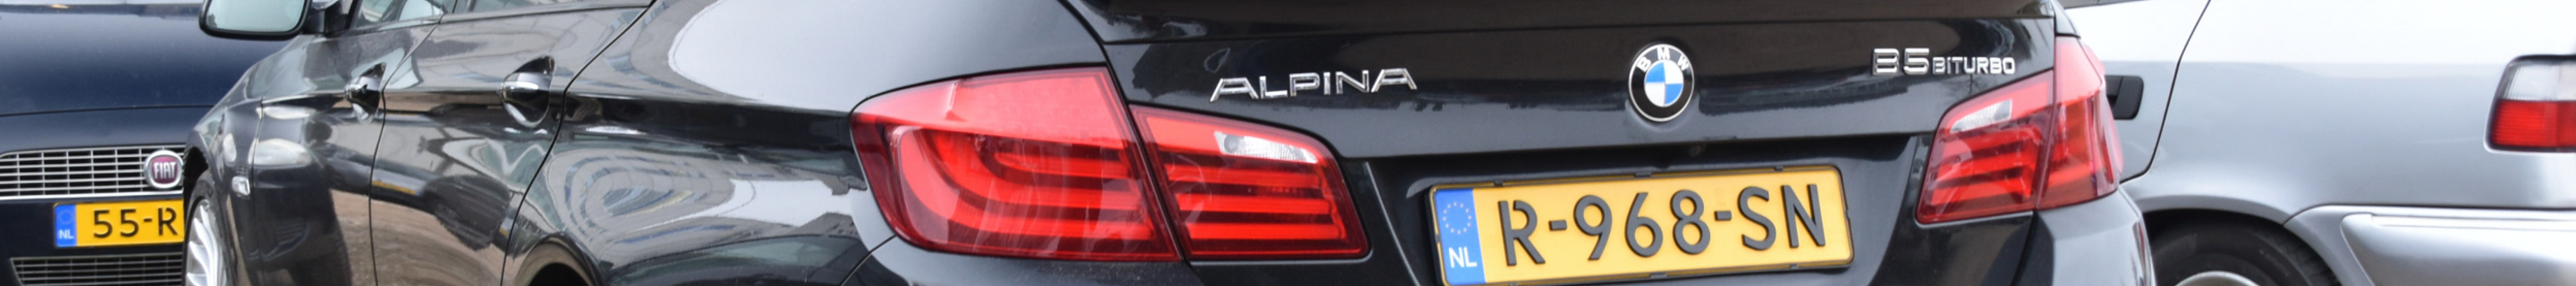 Alpina B5 BiTurbo 2014